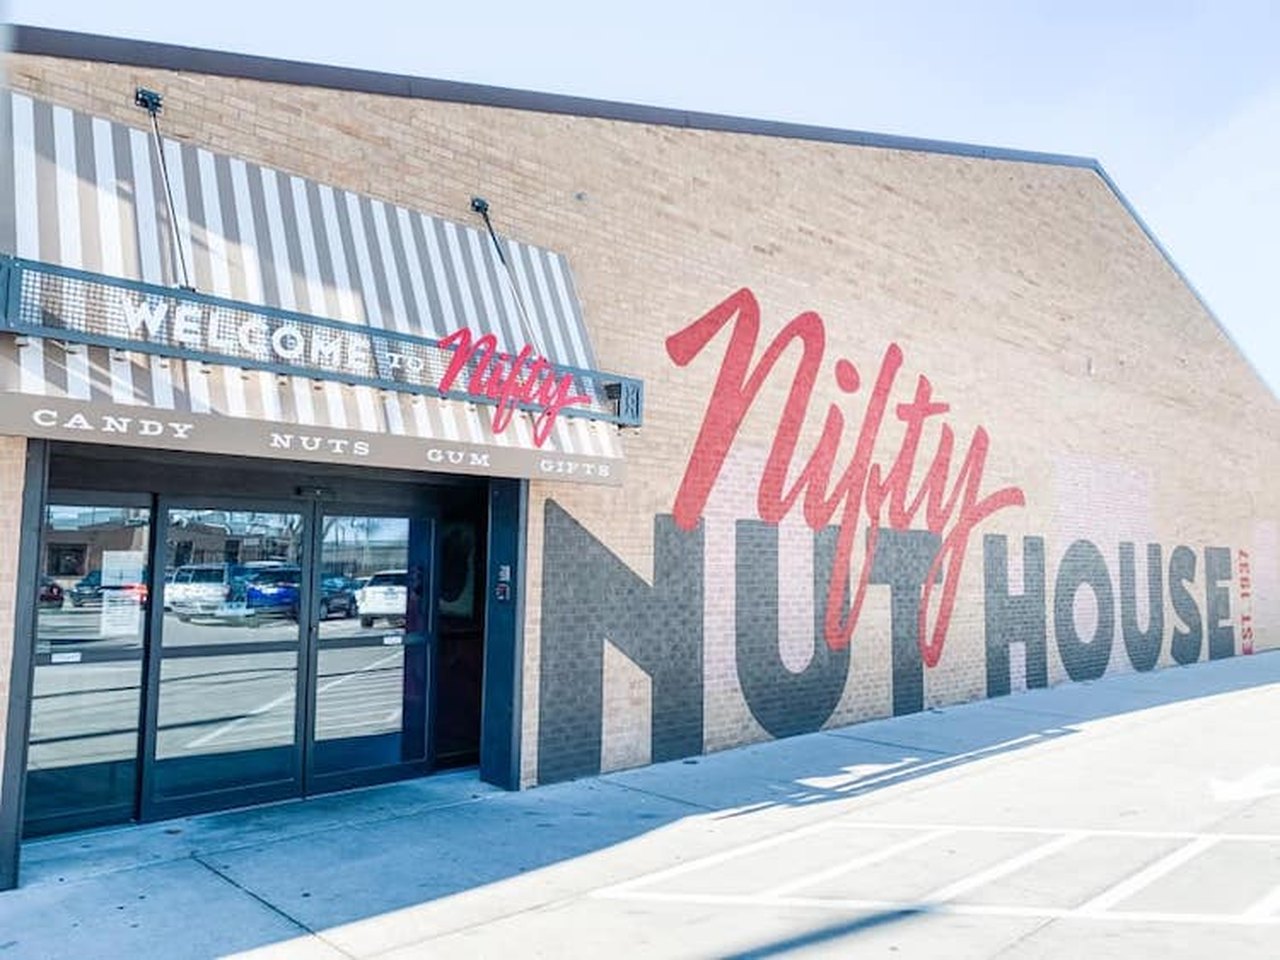 Nifty Nut House: Wichita's Version of Willy Wonka